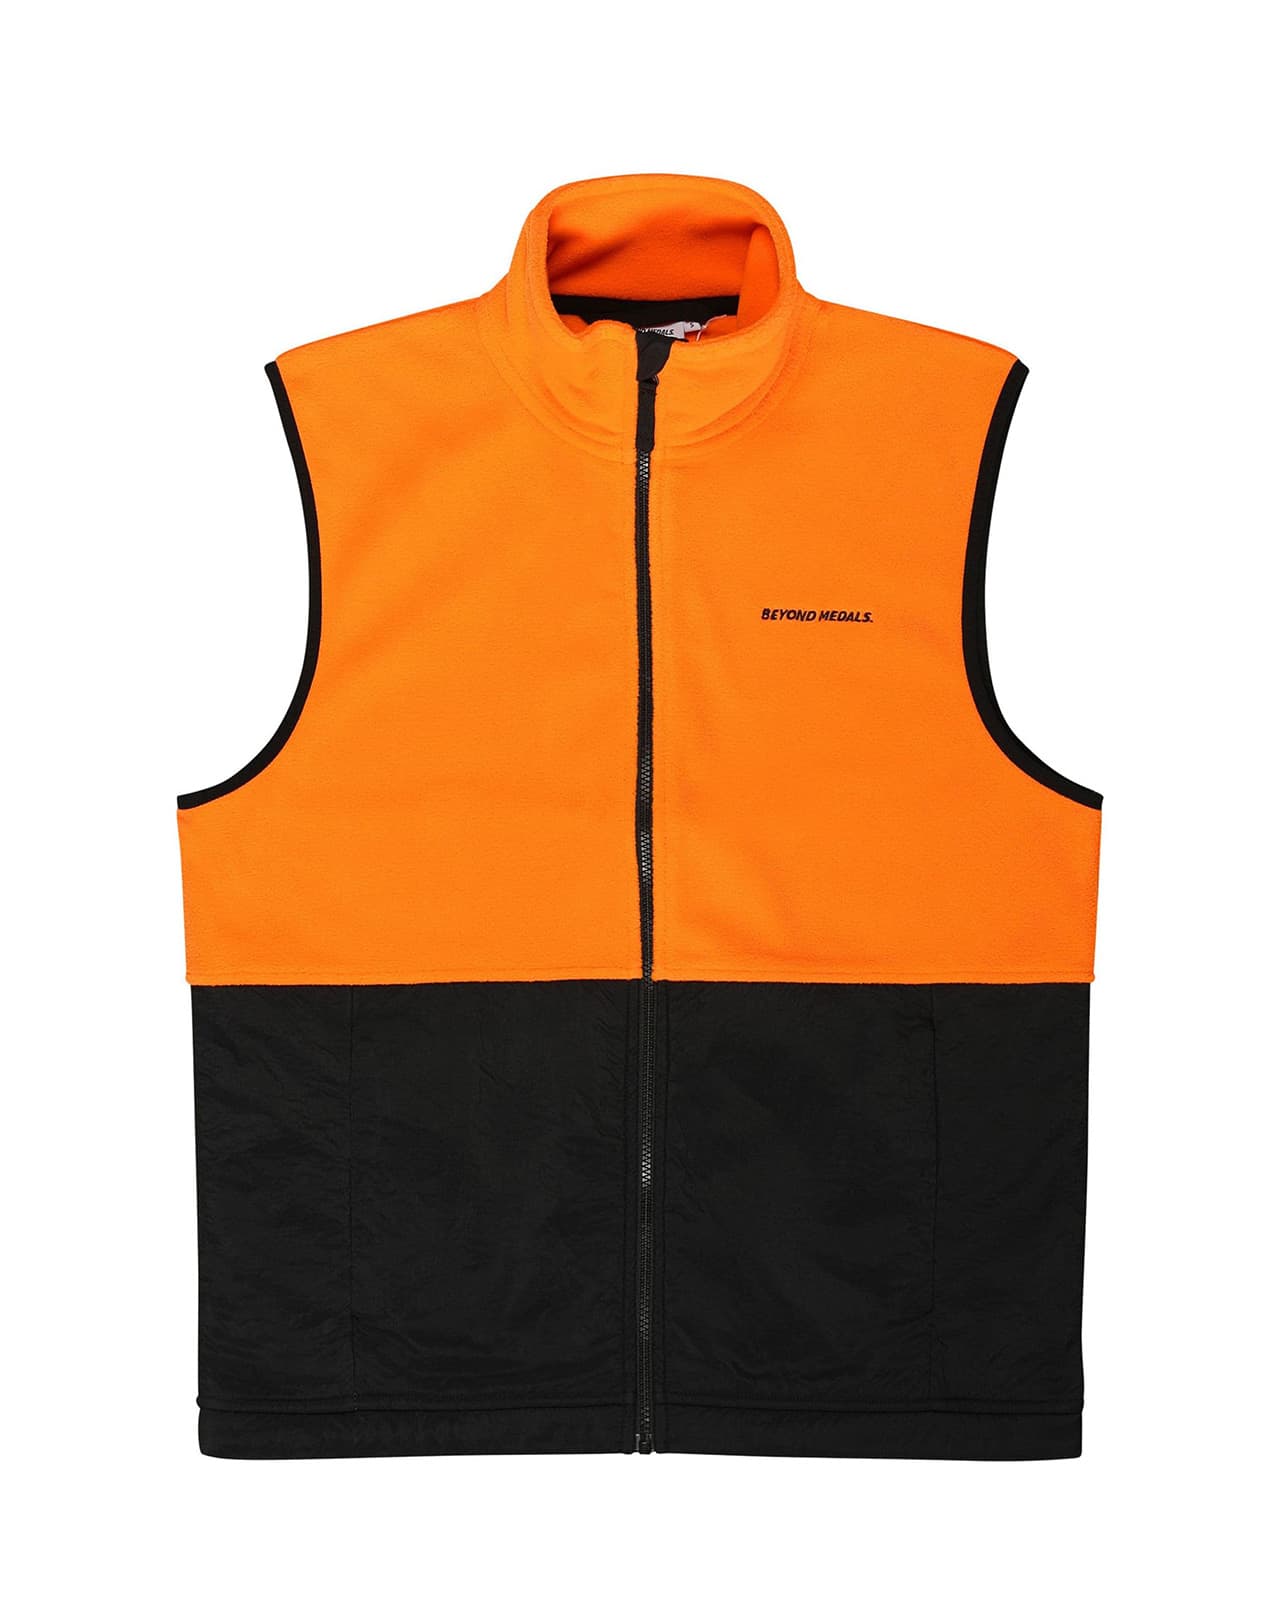 Fleece Vest Orange | AW23 Layering | Beyond Medals